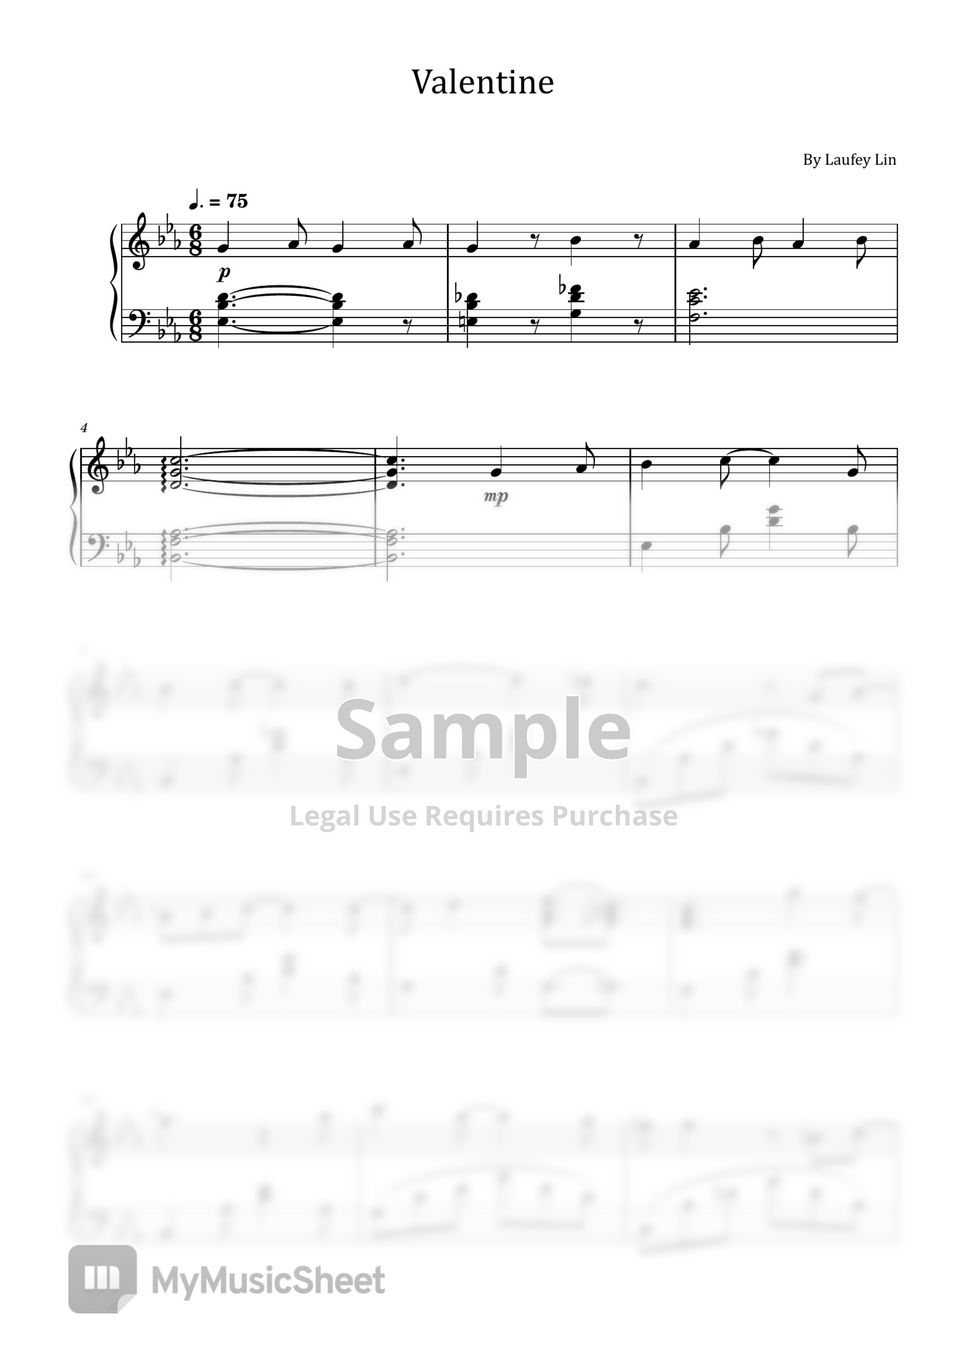 Laufey Lin - Valentine (Laufey - For Piano Solo) by poon